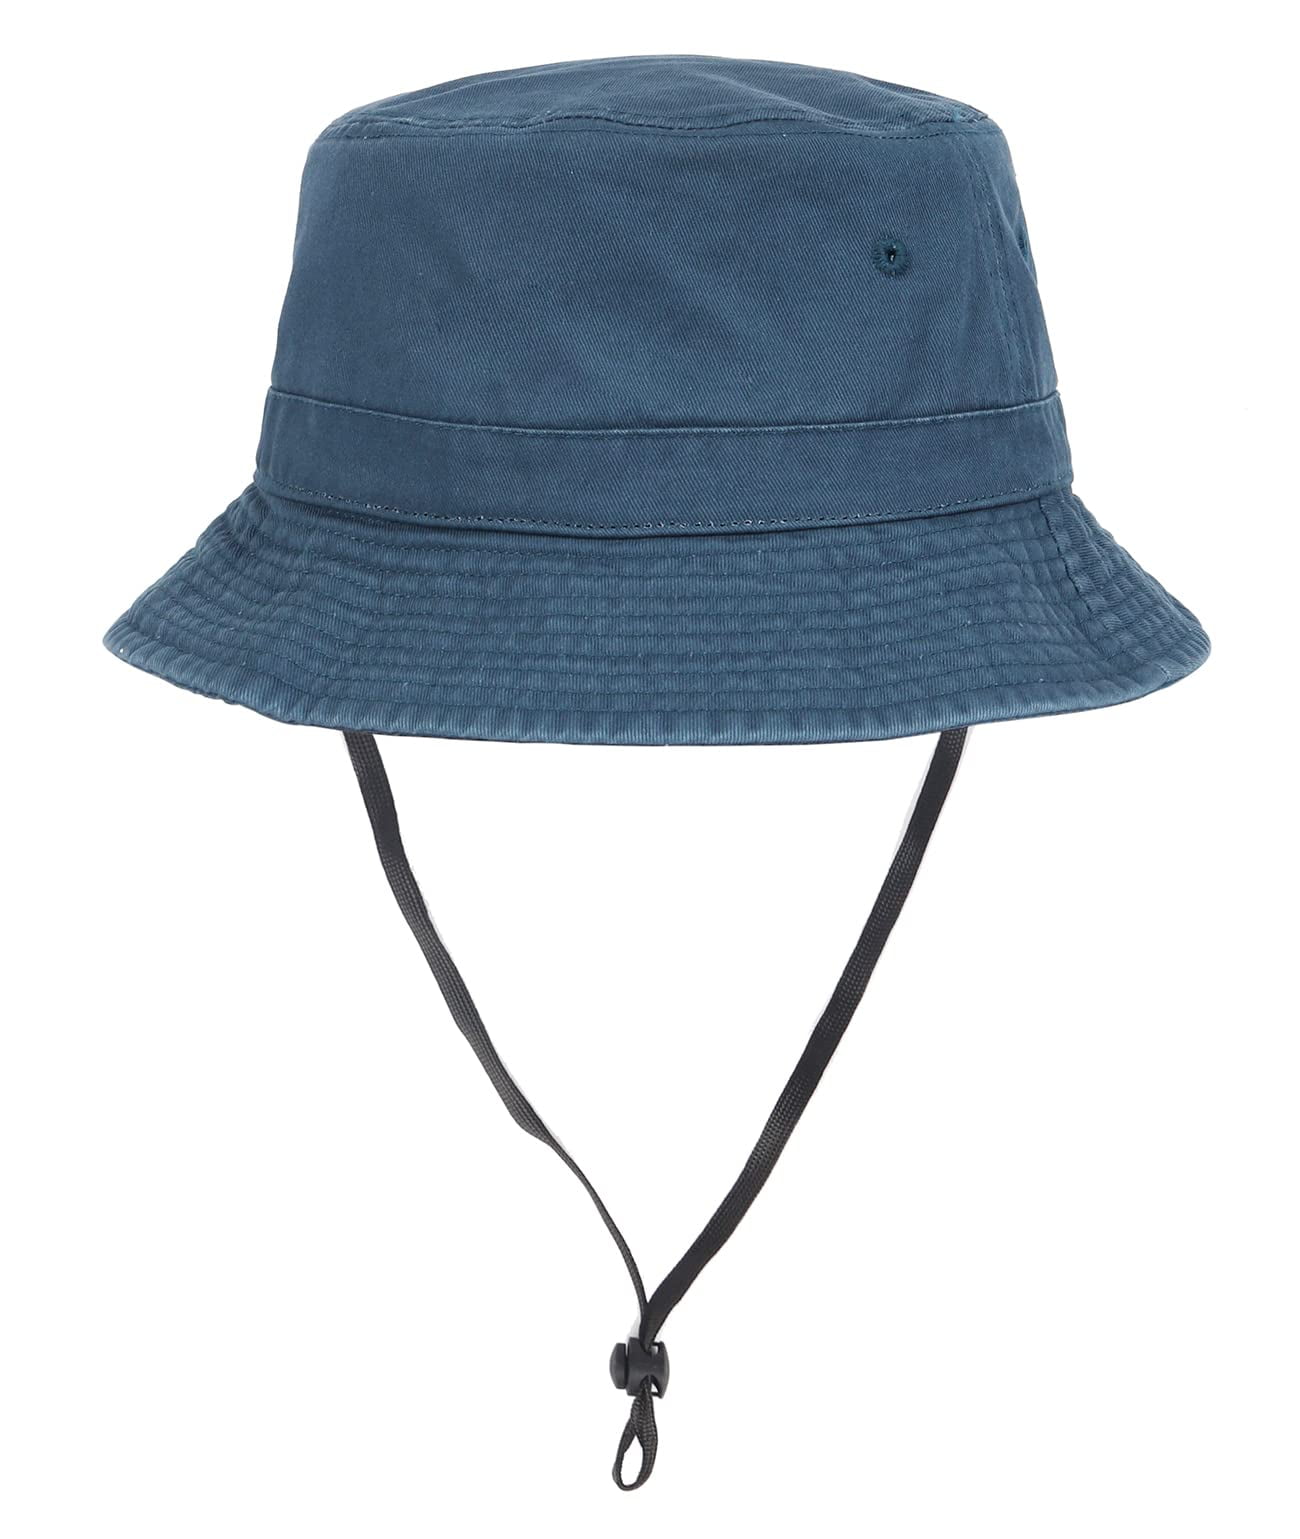 woede Kelder Meyella Zylioo Oversize XXL Washed Denim Bucket Hat,Large Foldable Jean Sun Hat,Packable  Travel Hats for Big Heads 22"-25" - Walmart.com